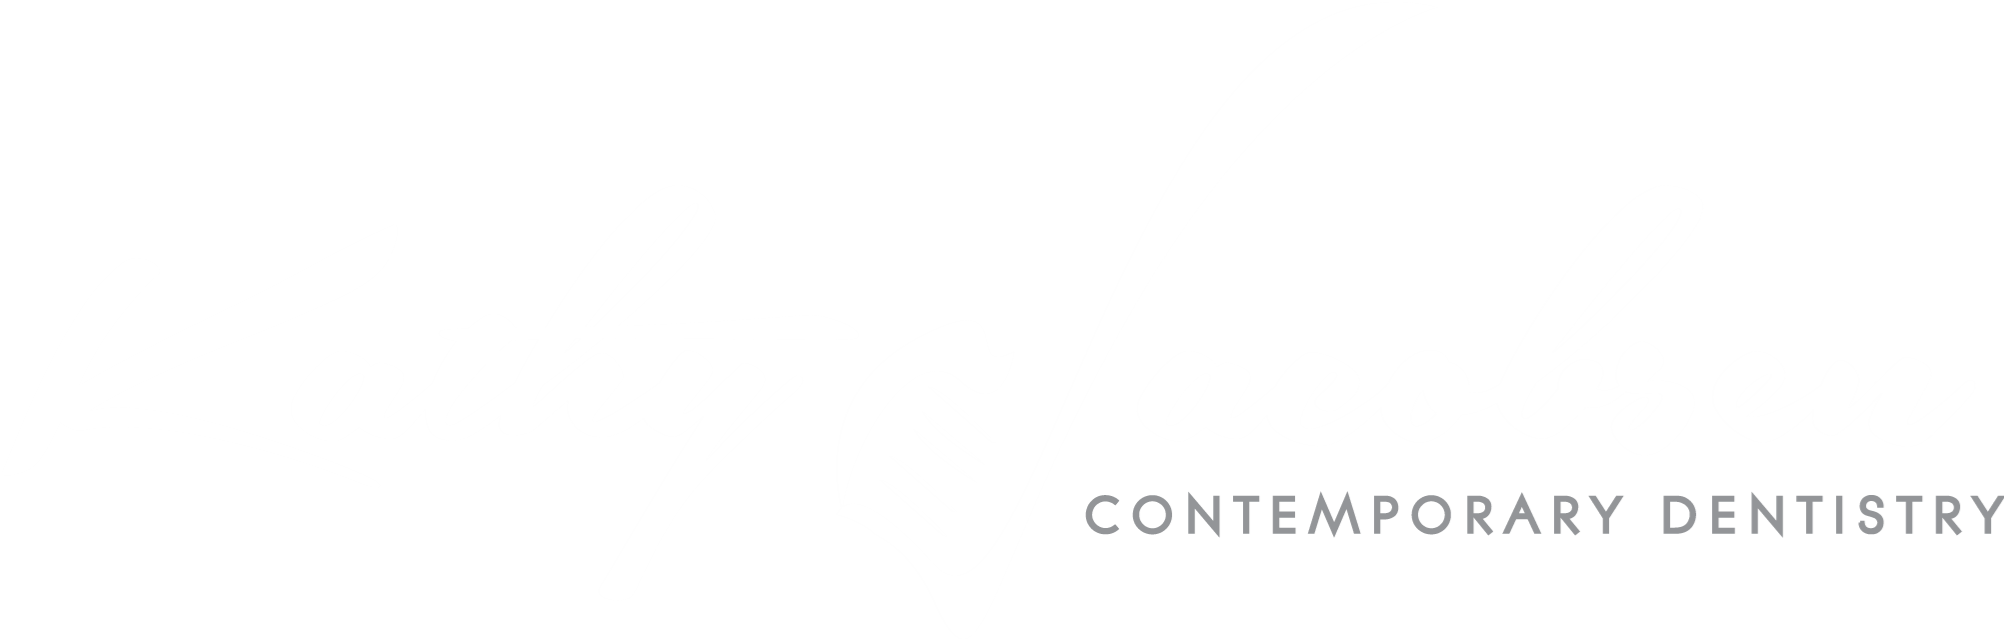 Company logo of Kathy Jacobsen Contemporary Dentistry